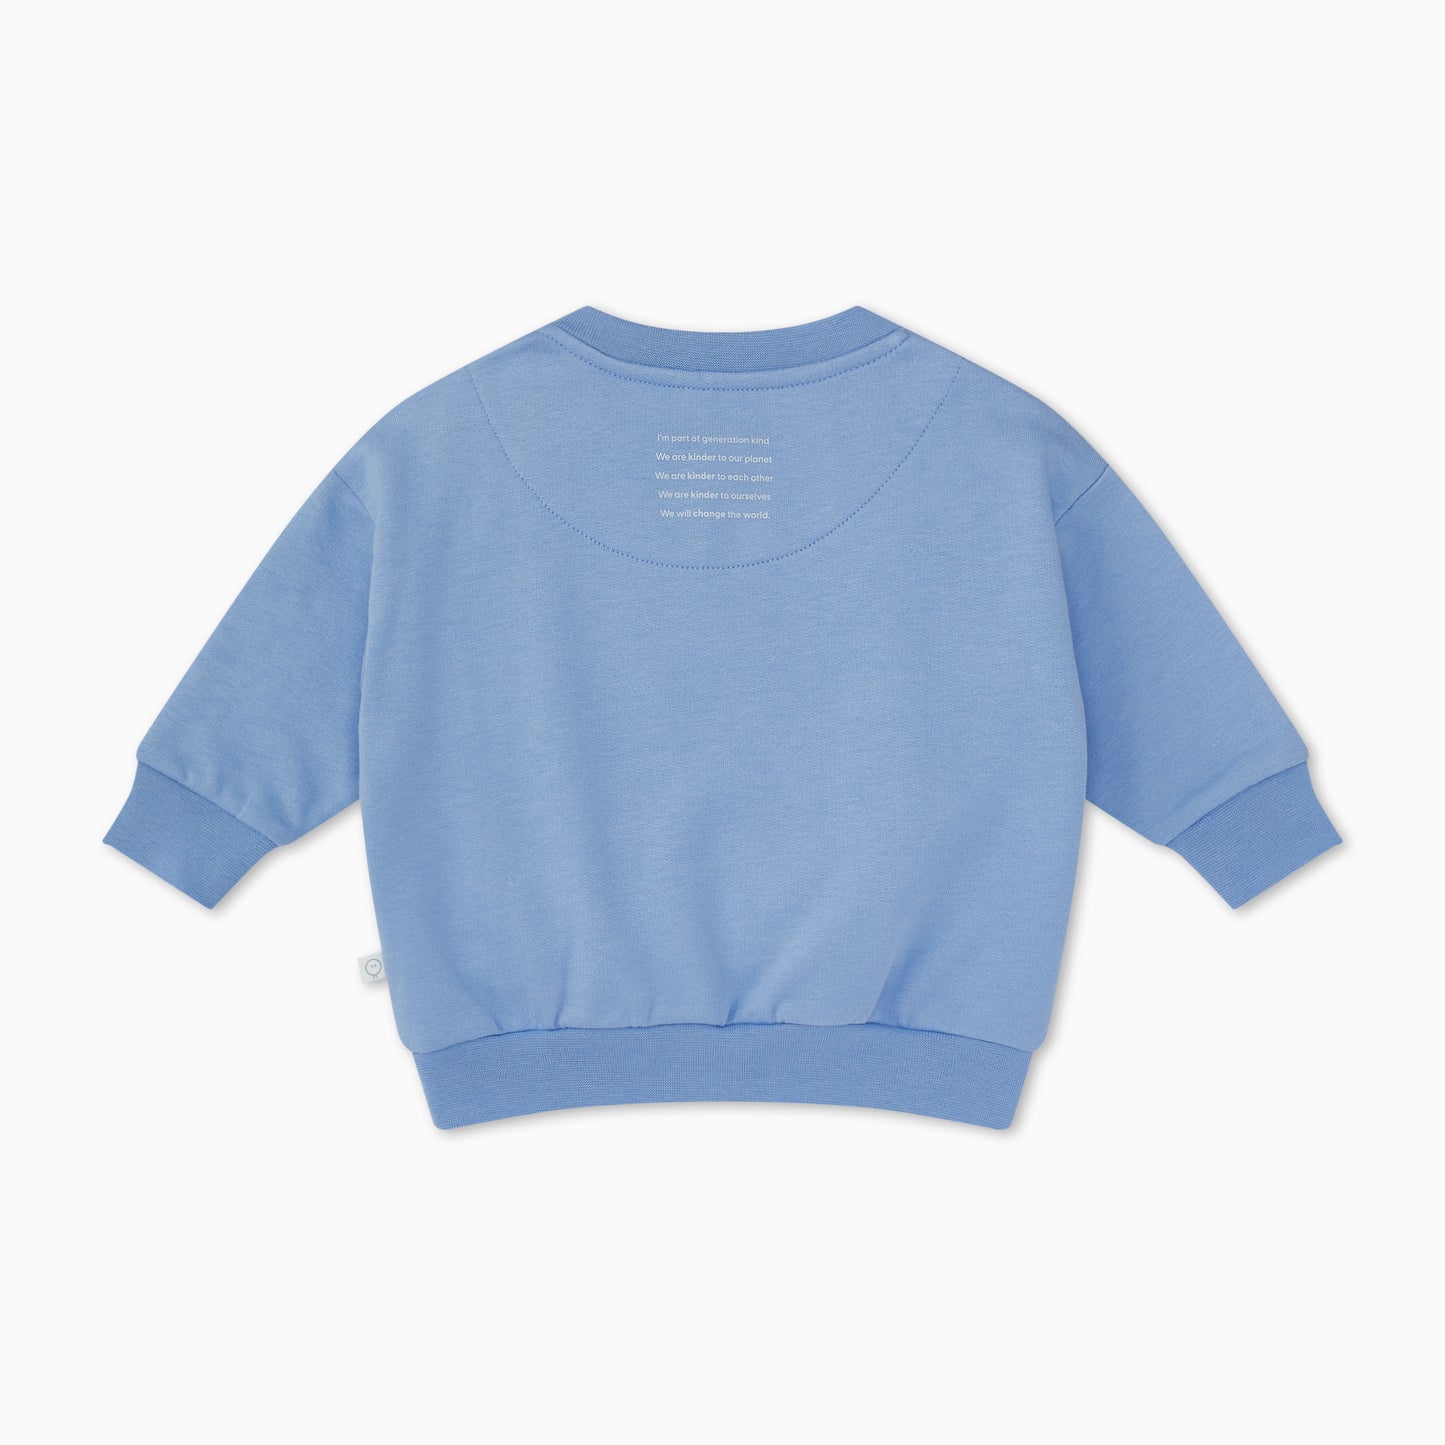 Generation Kind oversized sweatshirt - blue